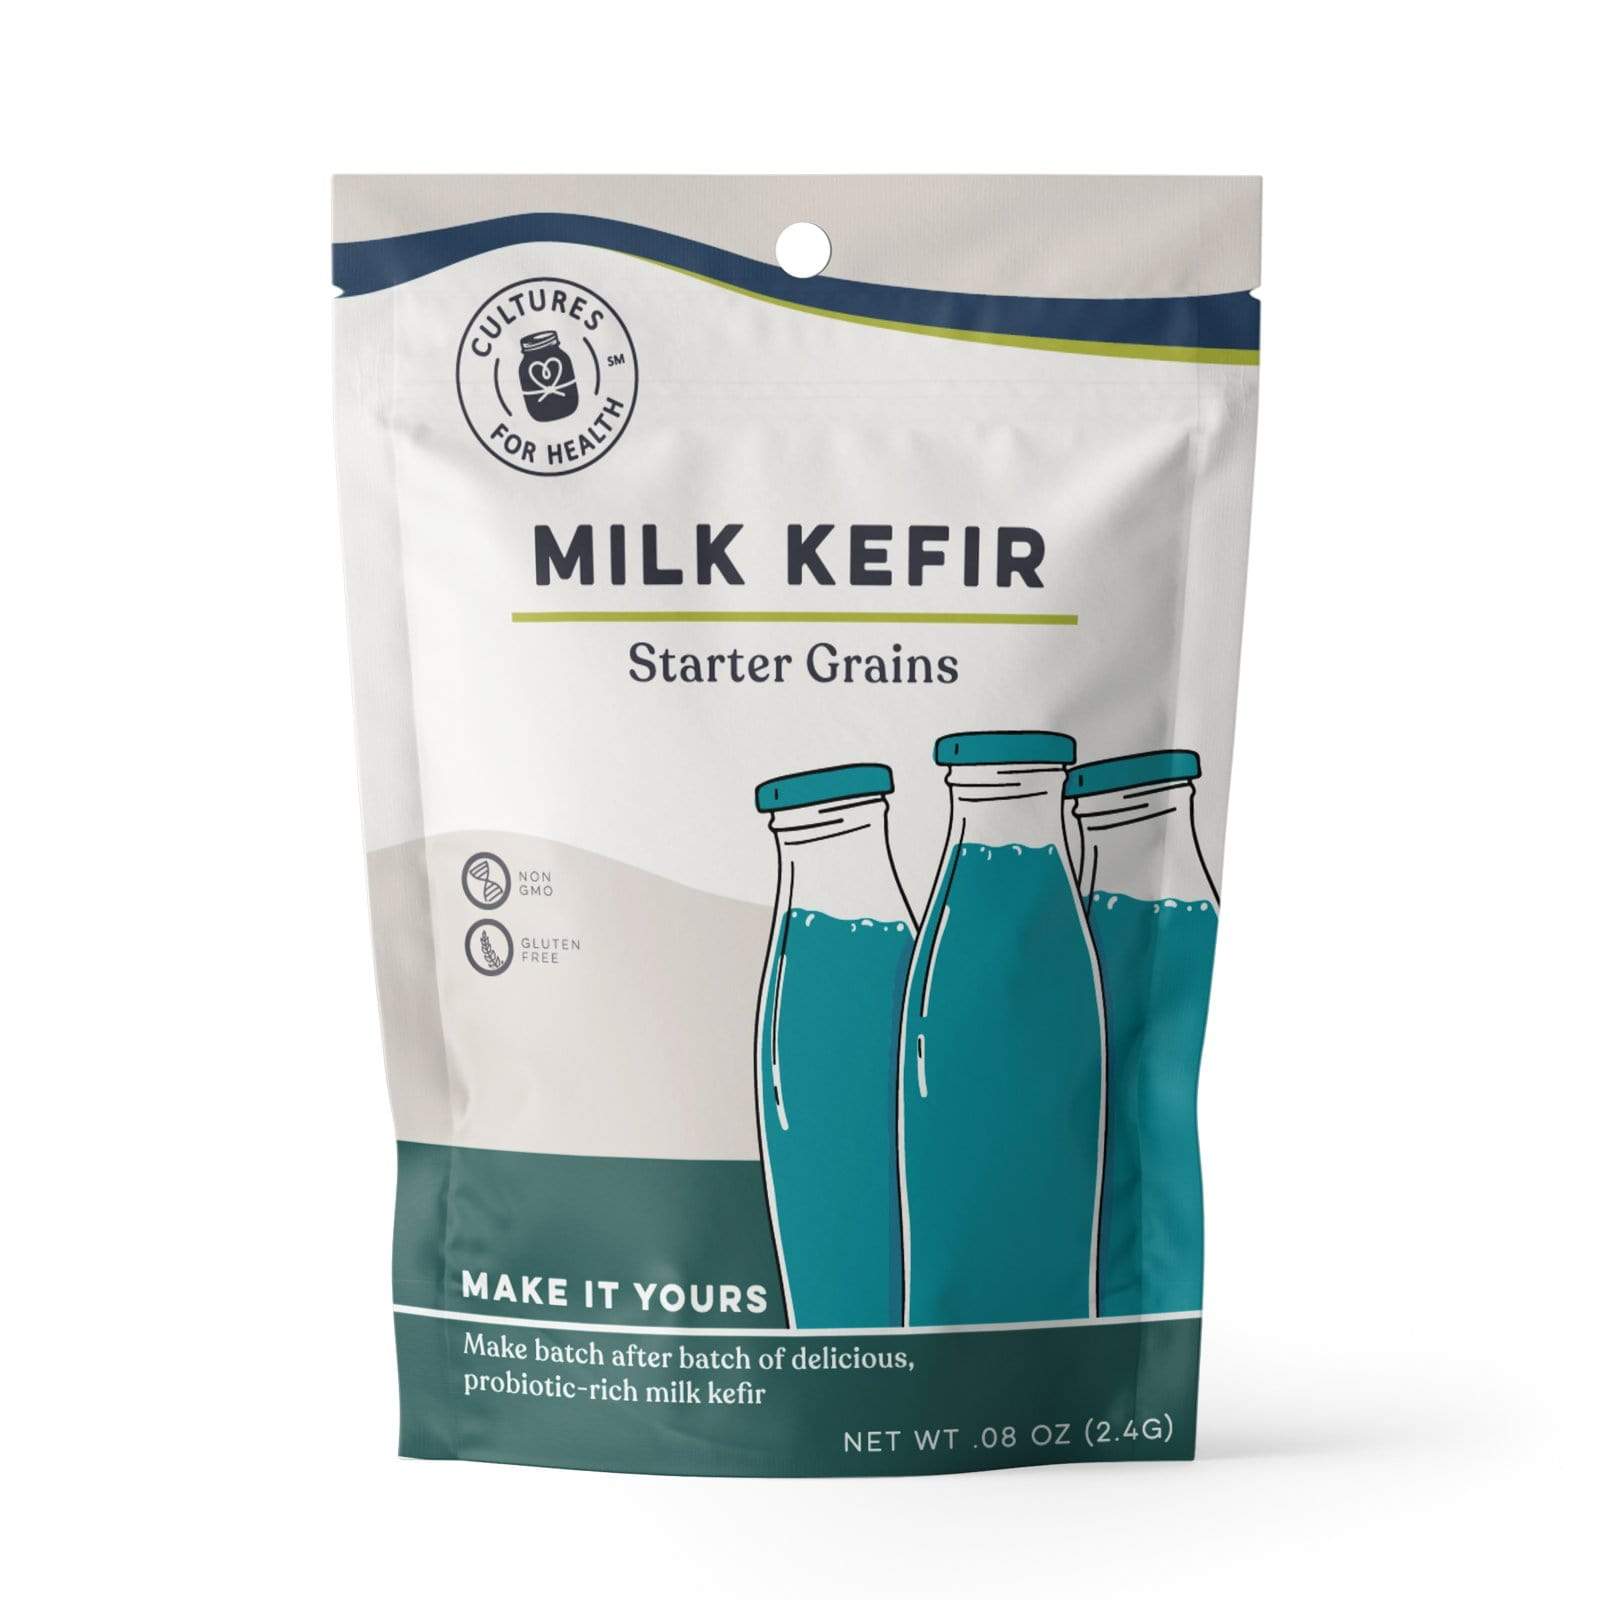 How to Make Milk Kefir - Aberle Home